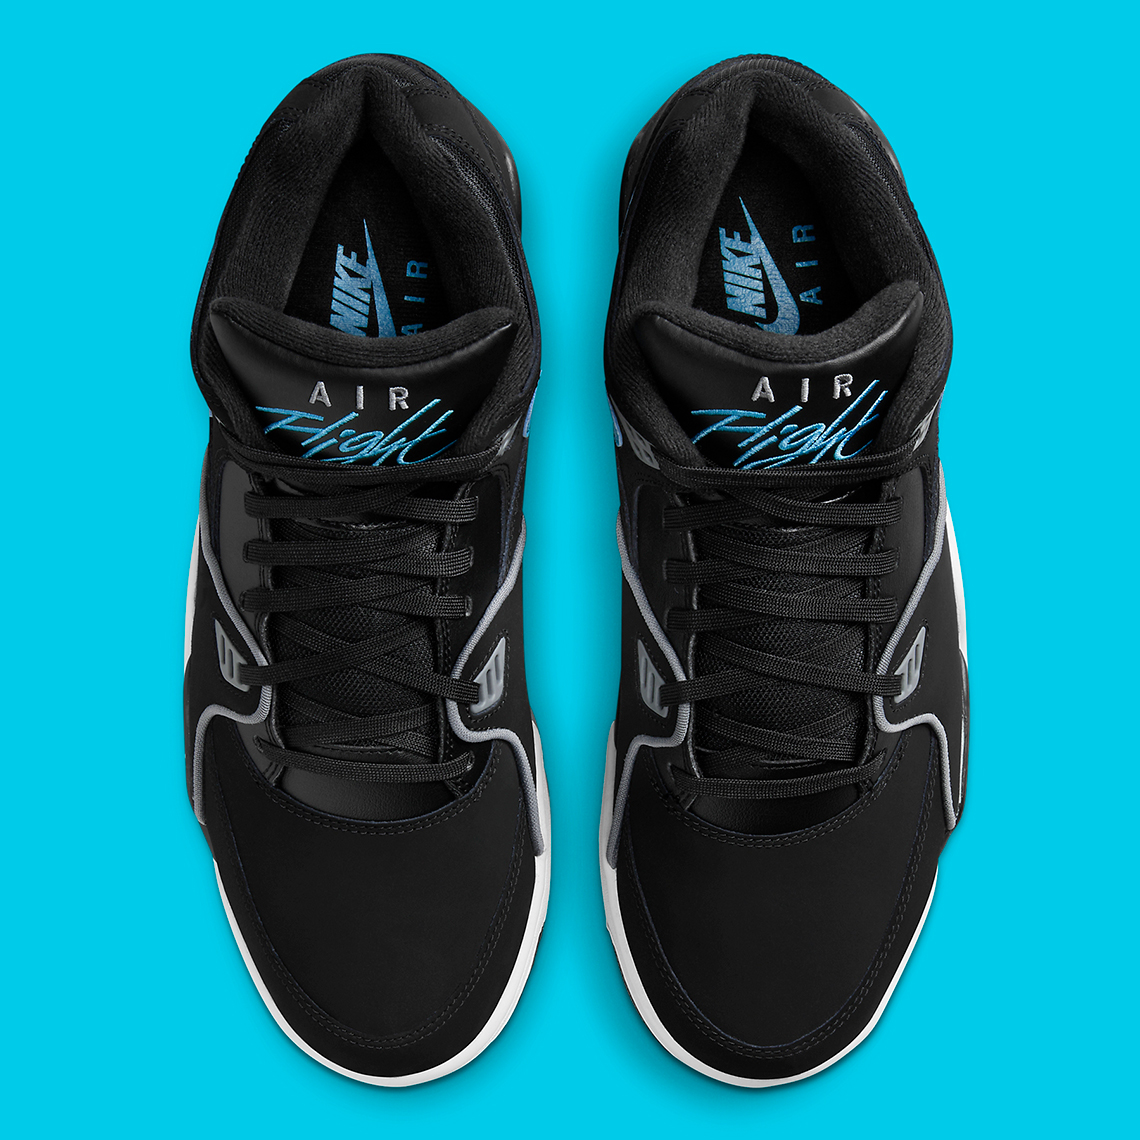 Nike Nike Air Max 97 'Cork' Black Blue Hf0102 001 4